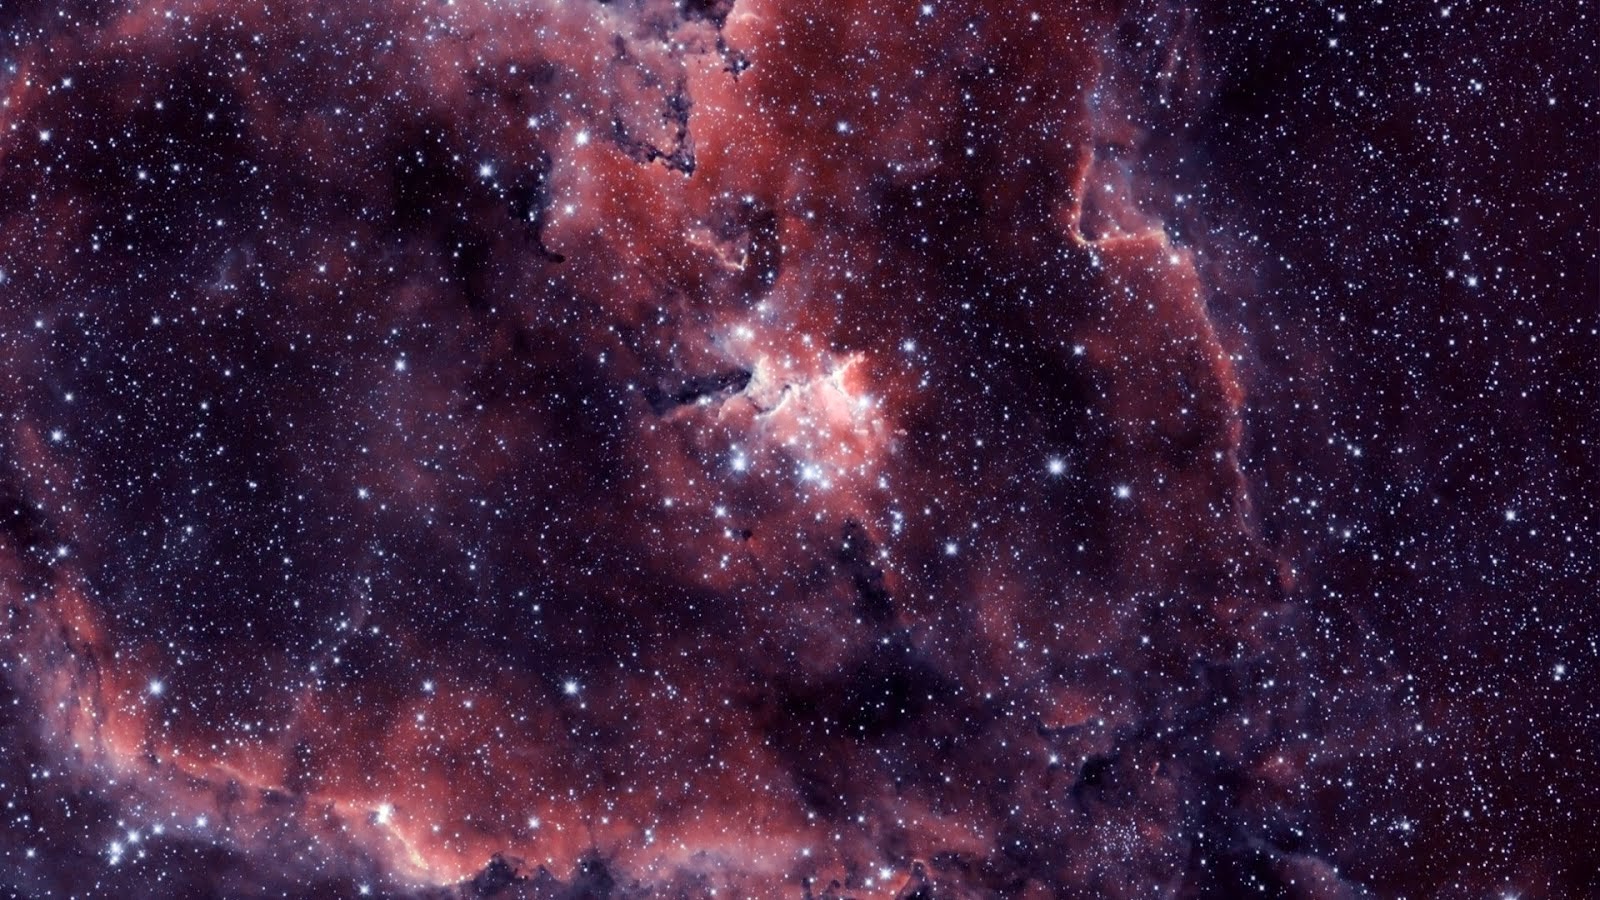 46+] Galaxy Wallpaper 1080p - WallpaperSafari